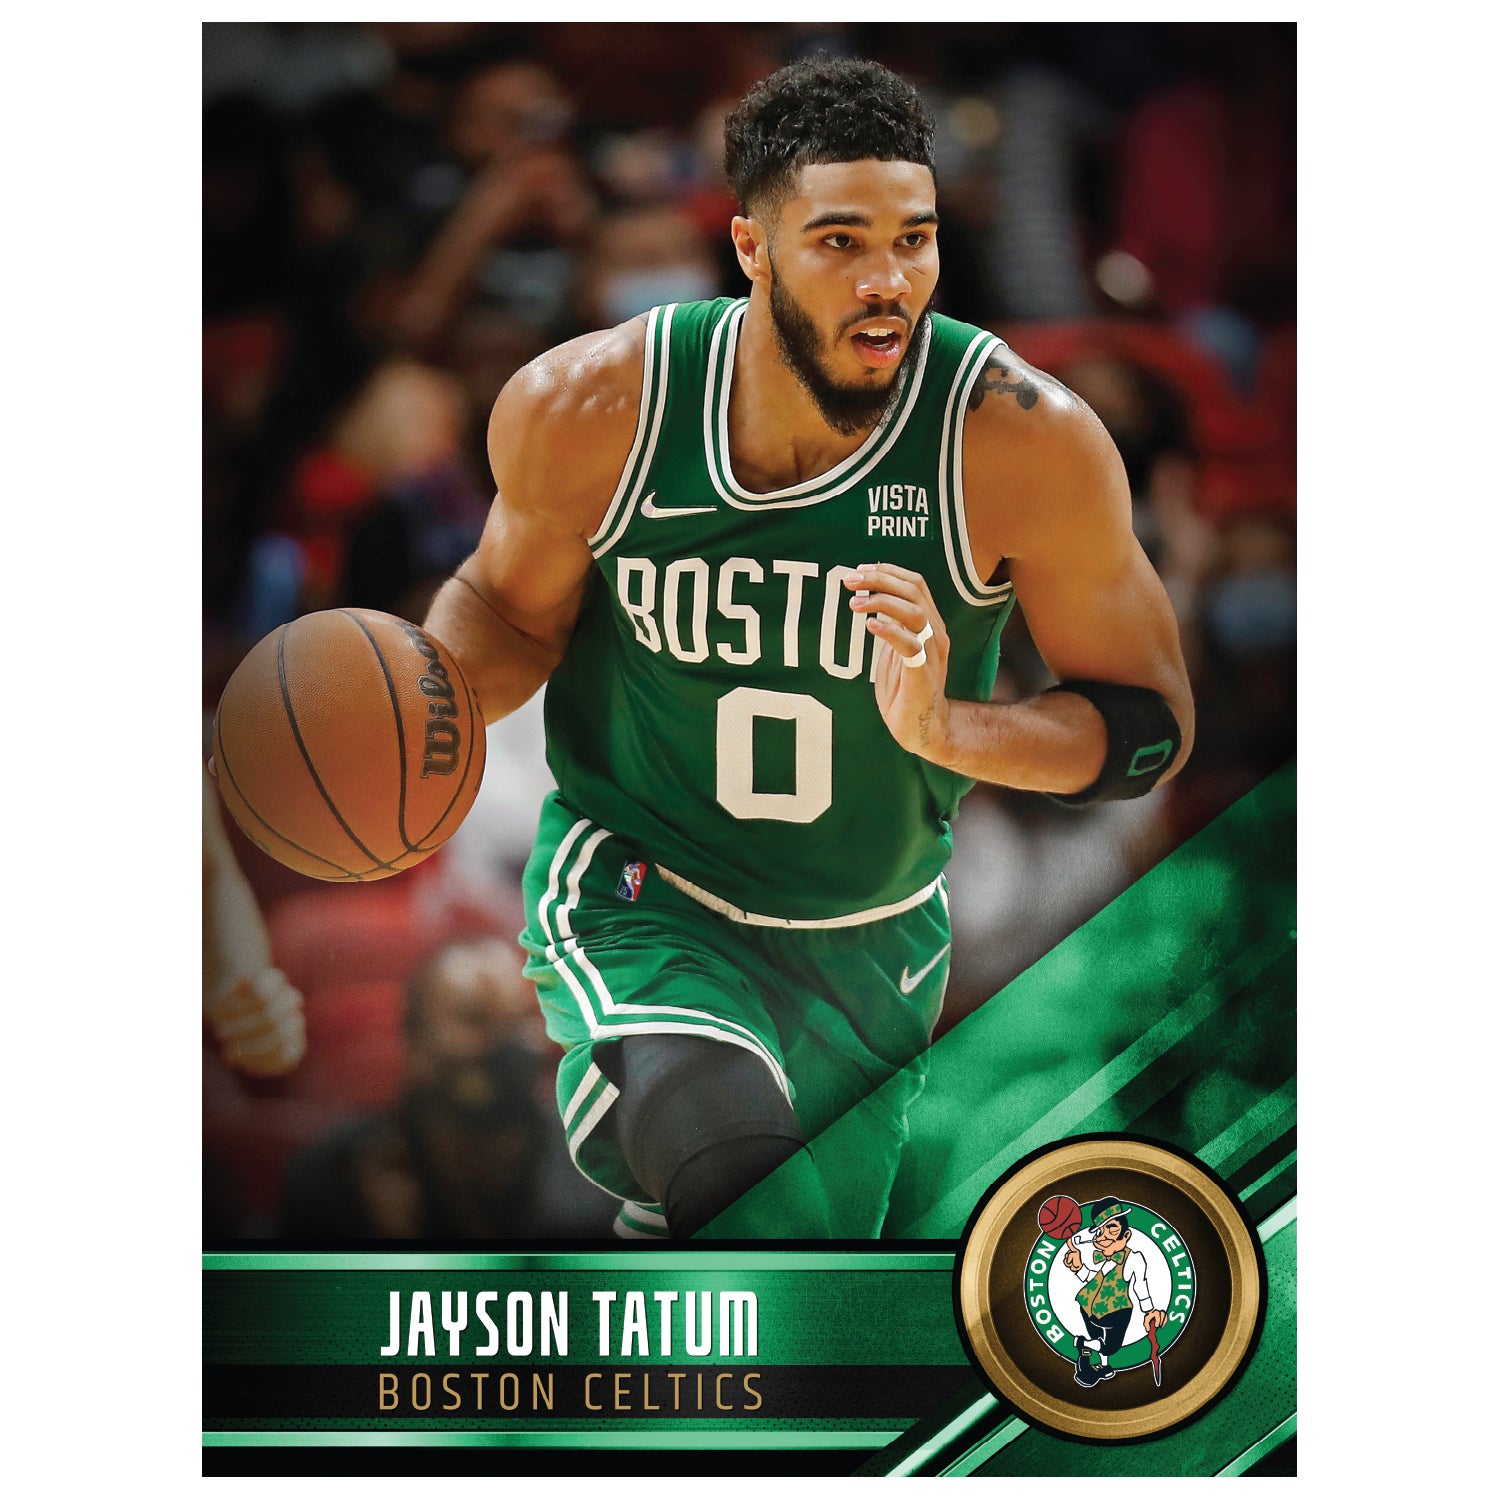 Boston Celtics: Jayson Tatum Poster - Officially Licensed NBA